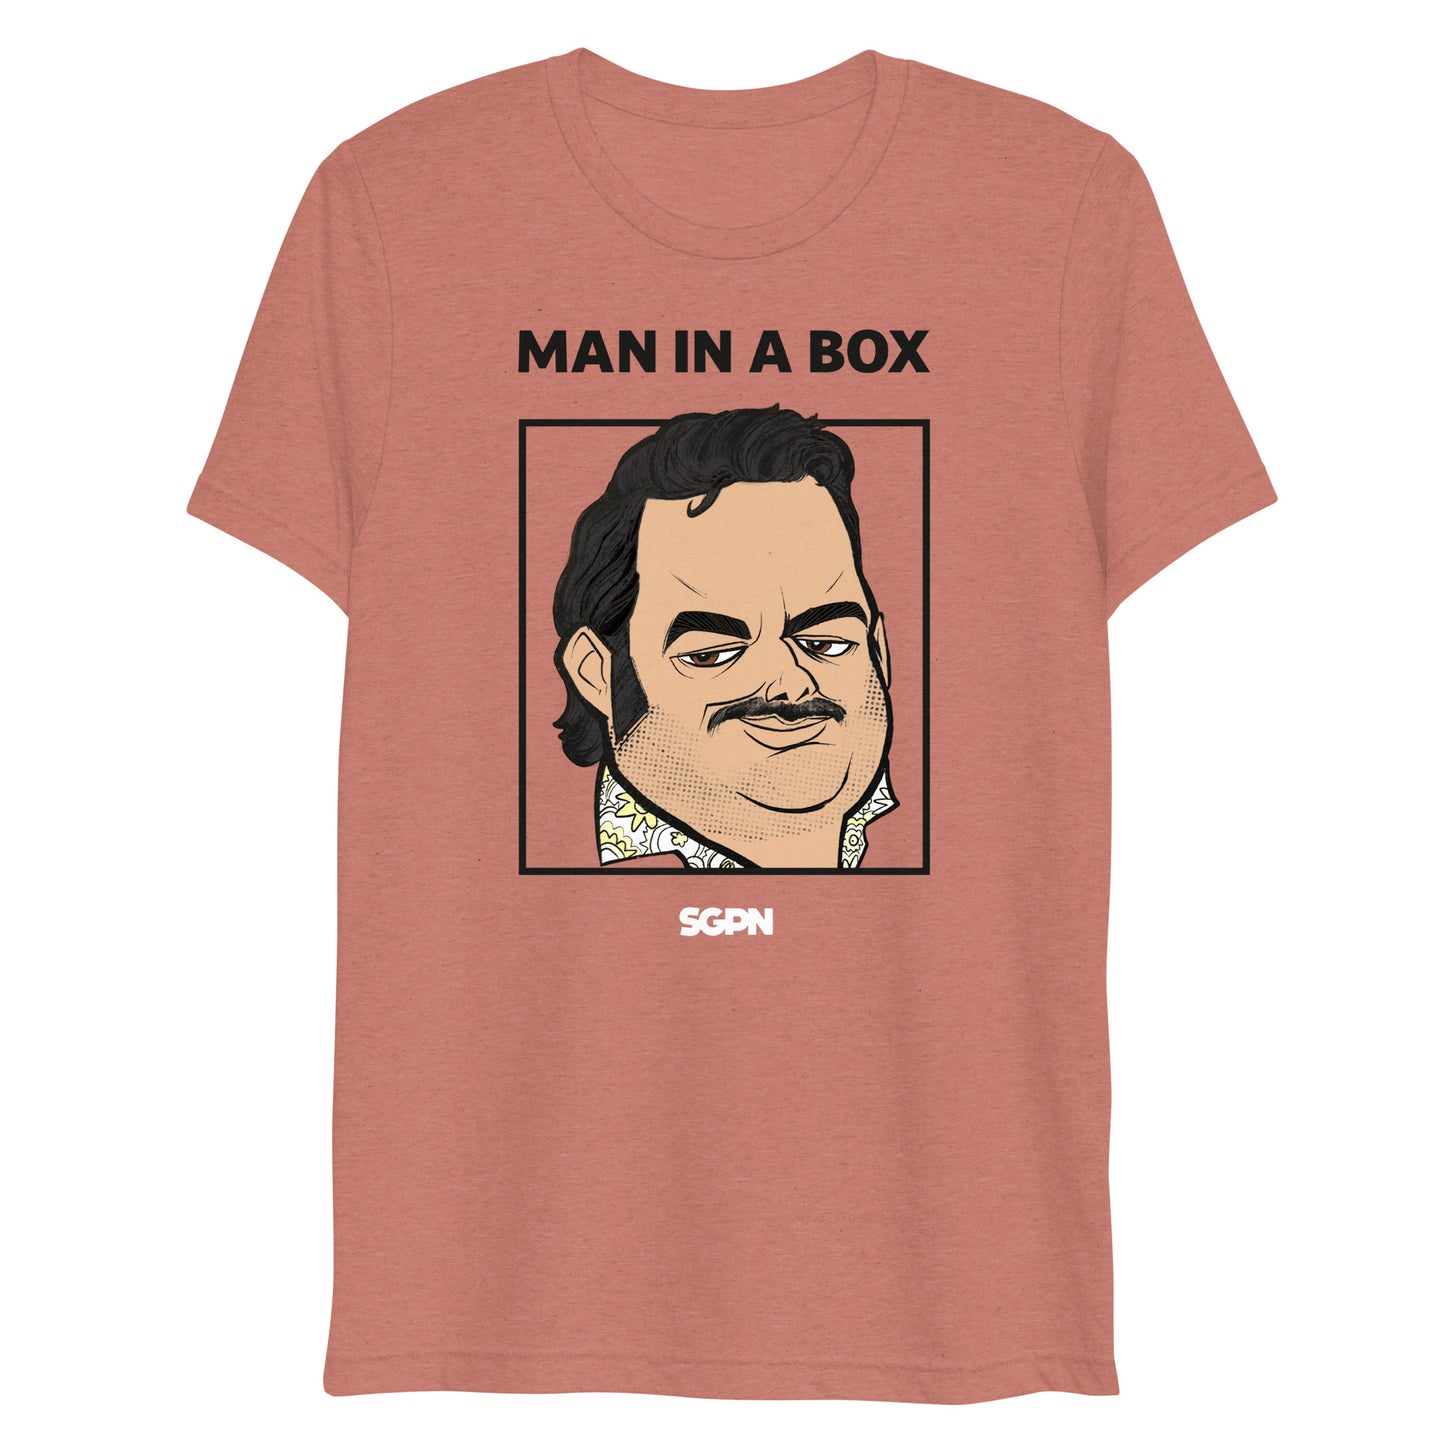 Man in a Box - Short sleeve t-shirt